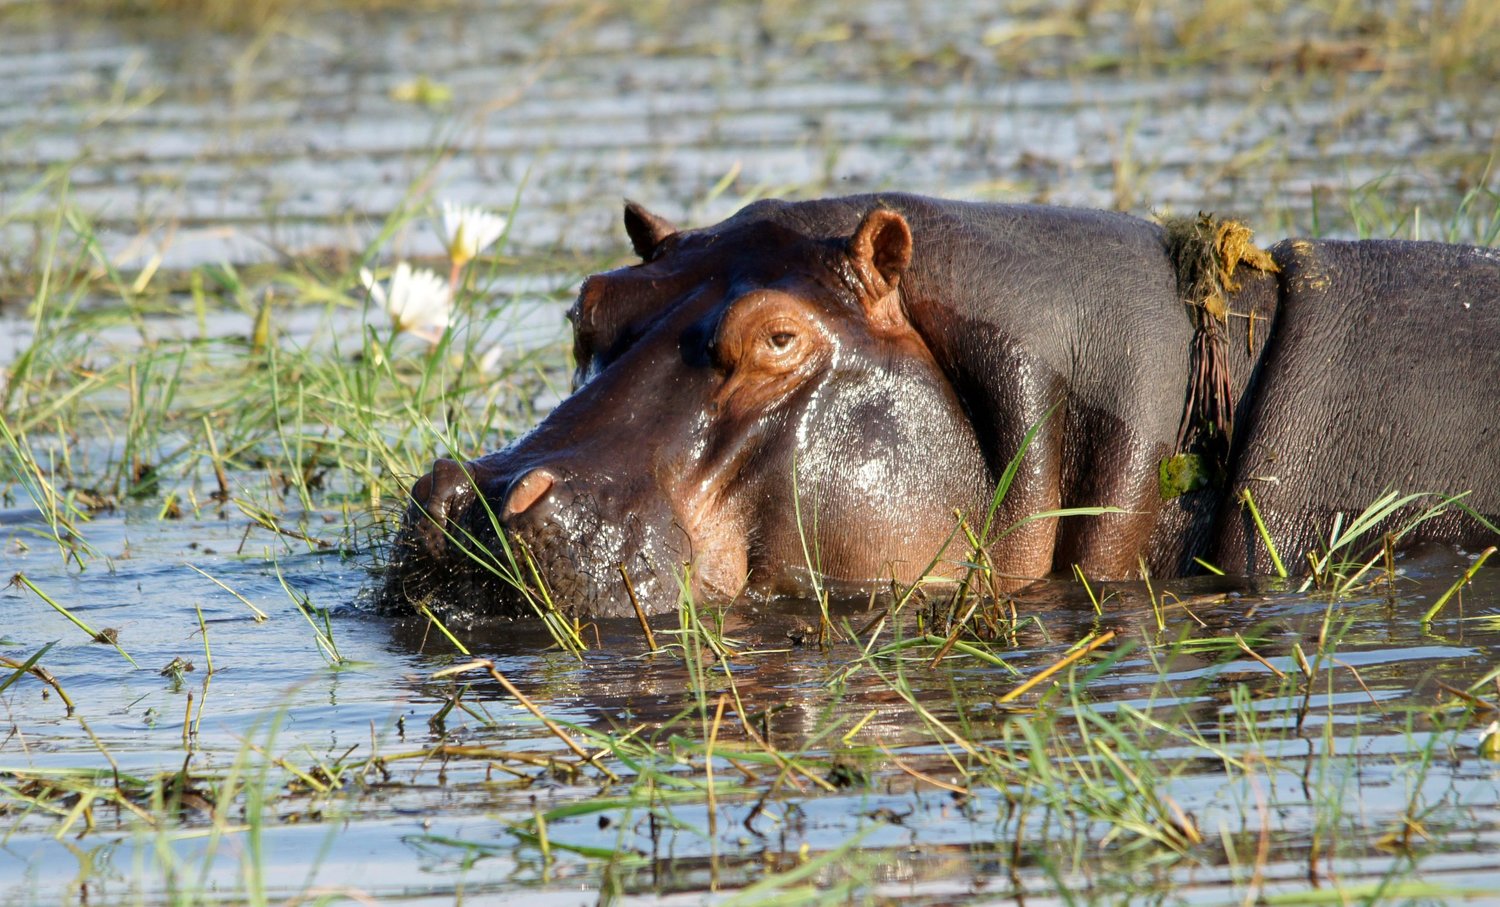 Hippo in the Zambezi River [Photo by Ansie Potgieter/Upsplash]